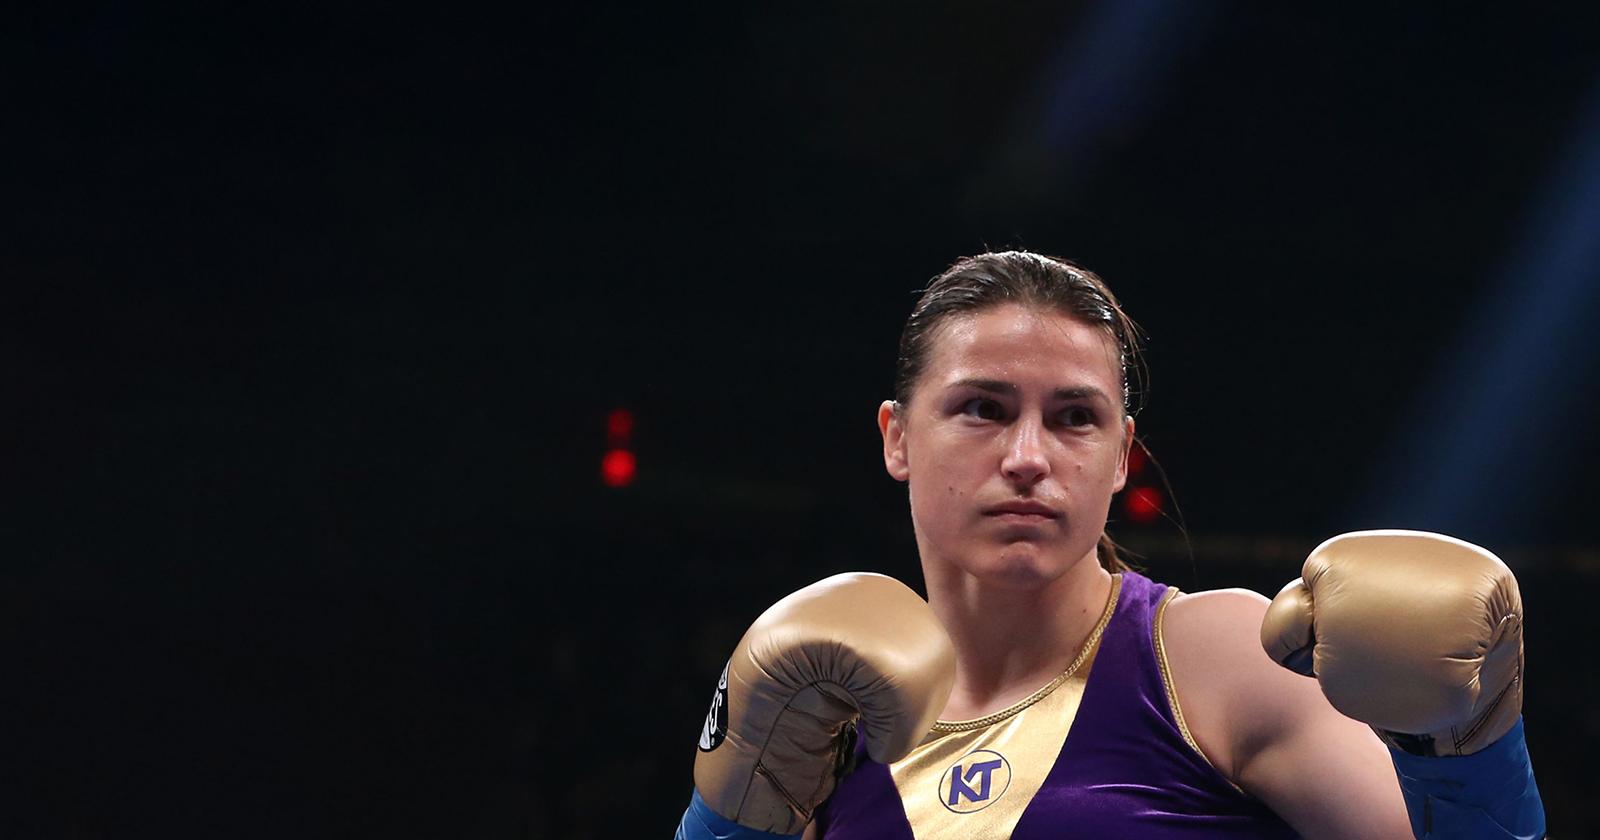 Katie Taylor: The True Superhero Of Women’s Boxing